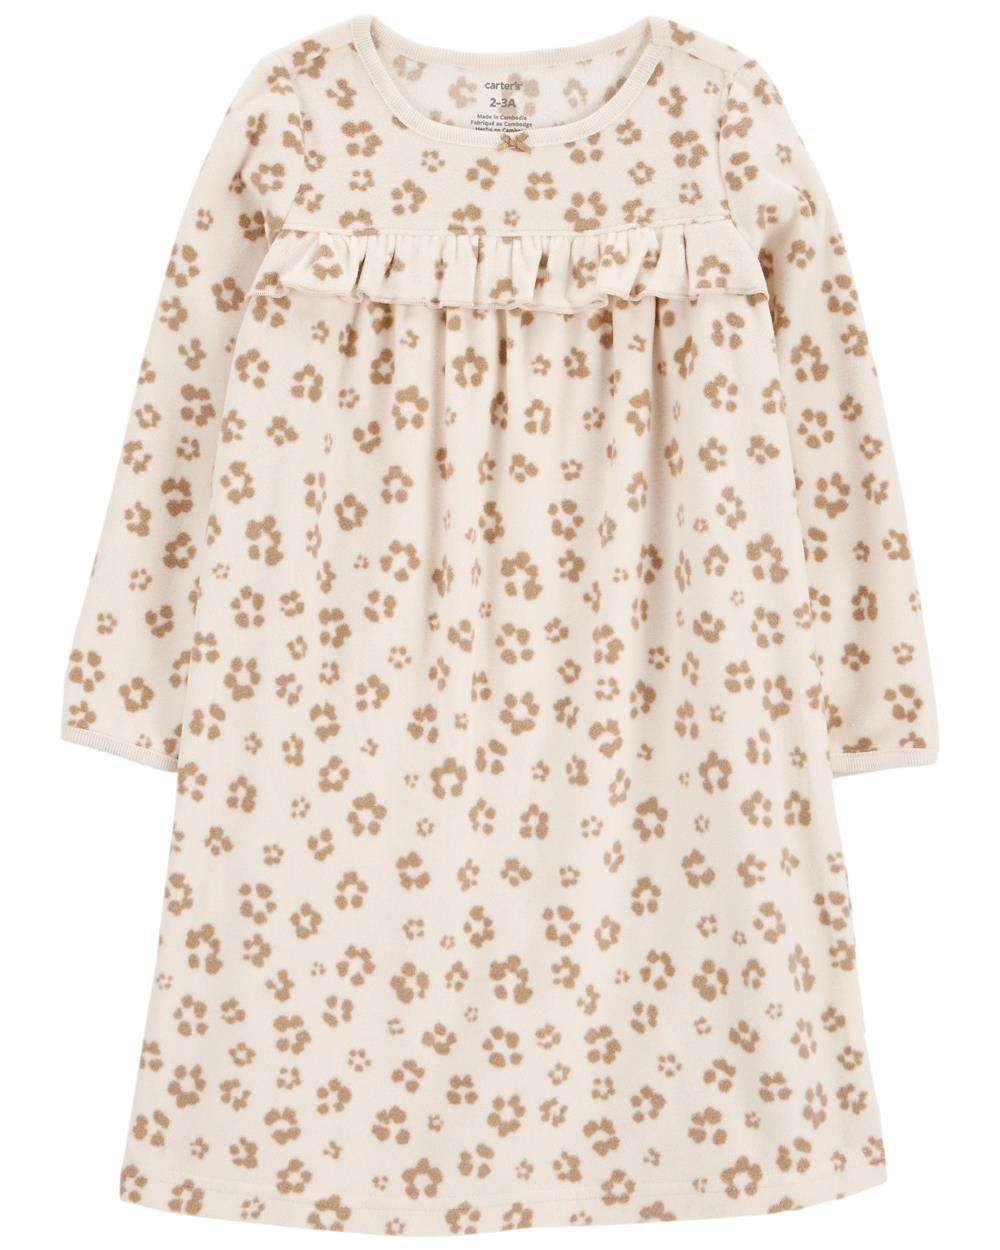 Carters Girls 2-6X Leopard Fleece Nightgown